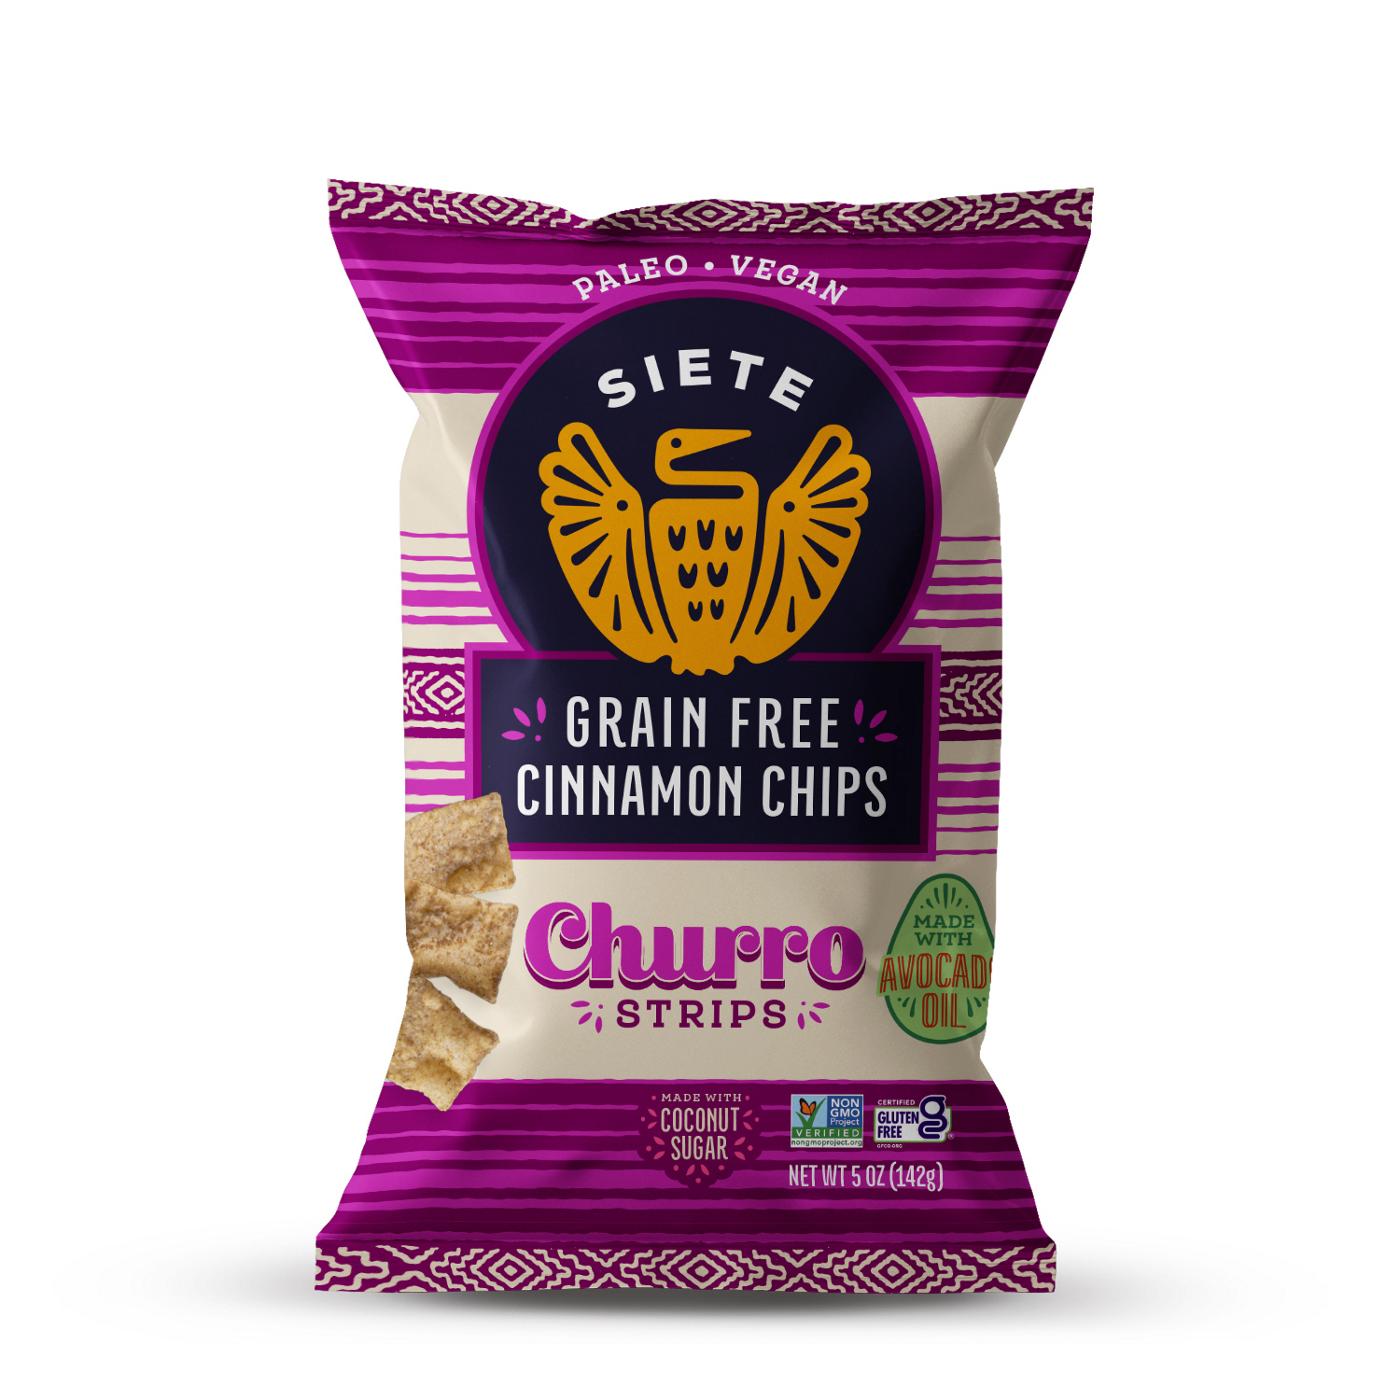 Siete Grain Free Cinnamon Chips Churro Strips; image 1 of 2